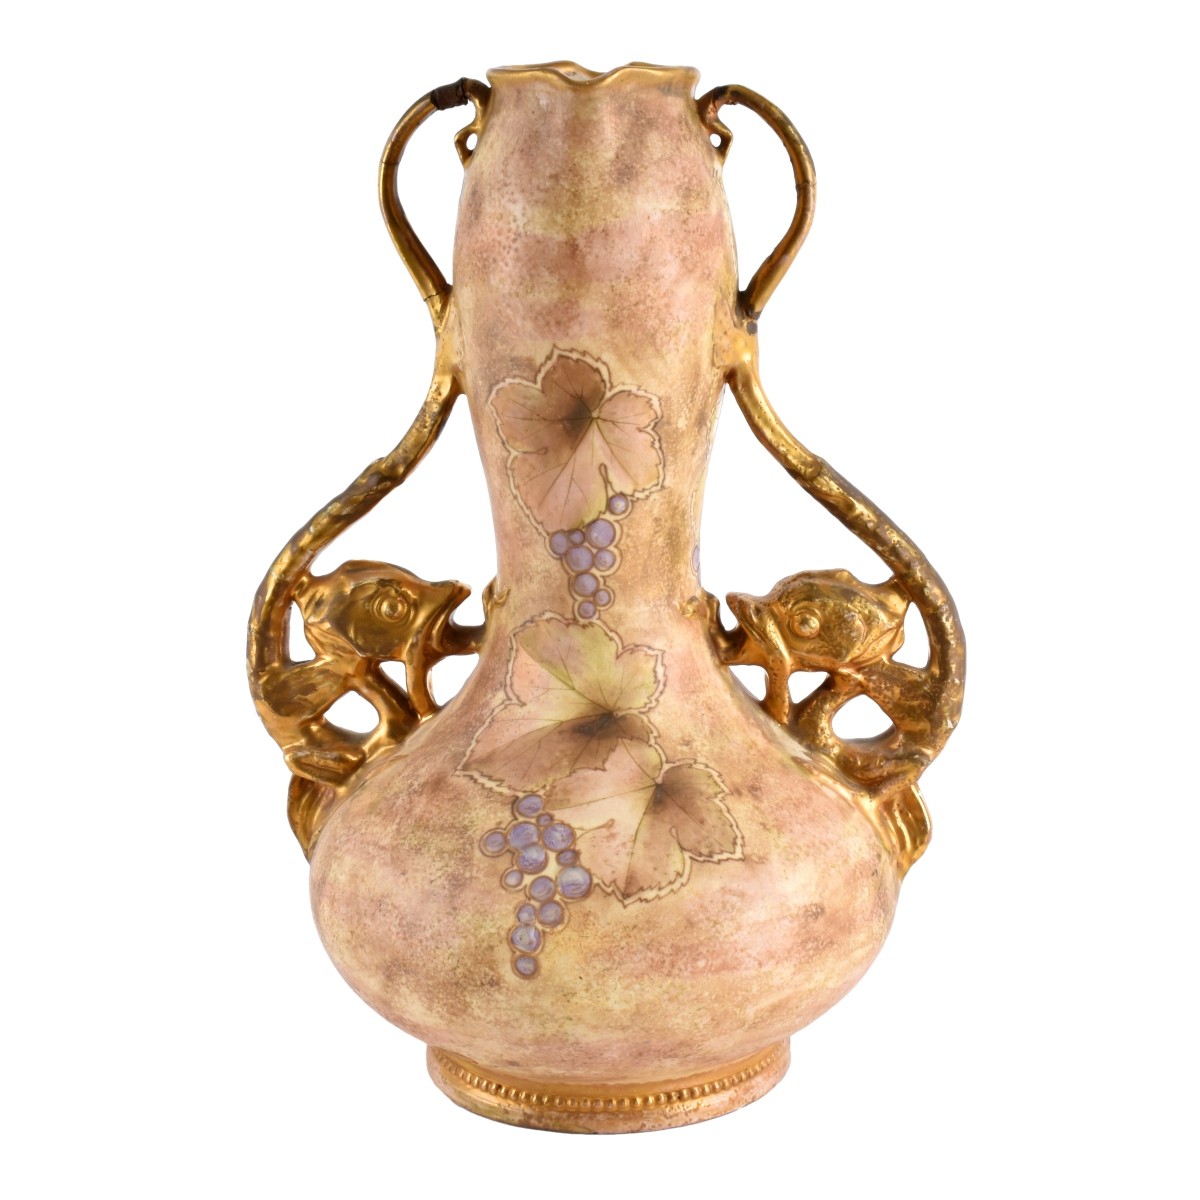 Amphora Turn Teplitz Porcelain Vase